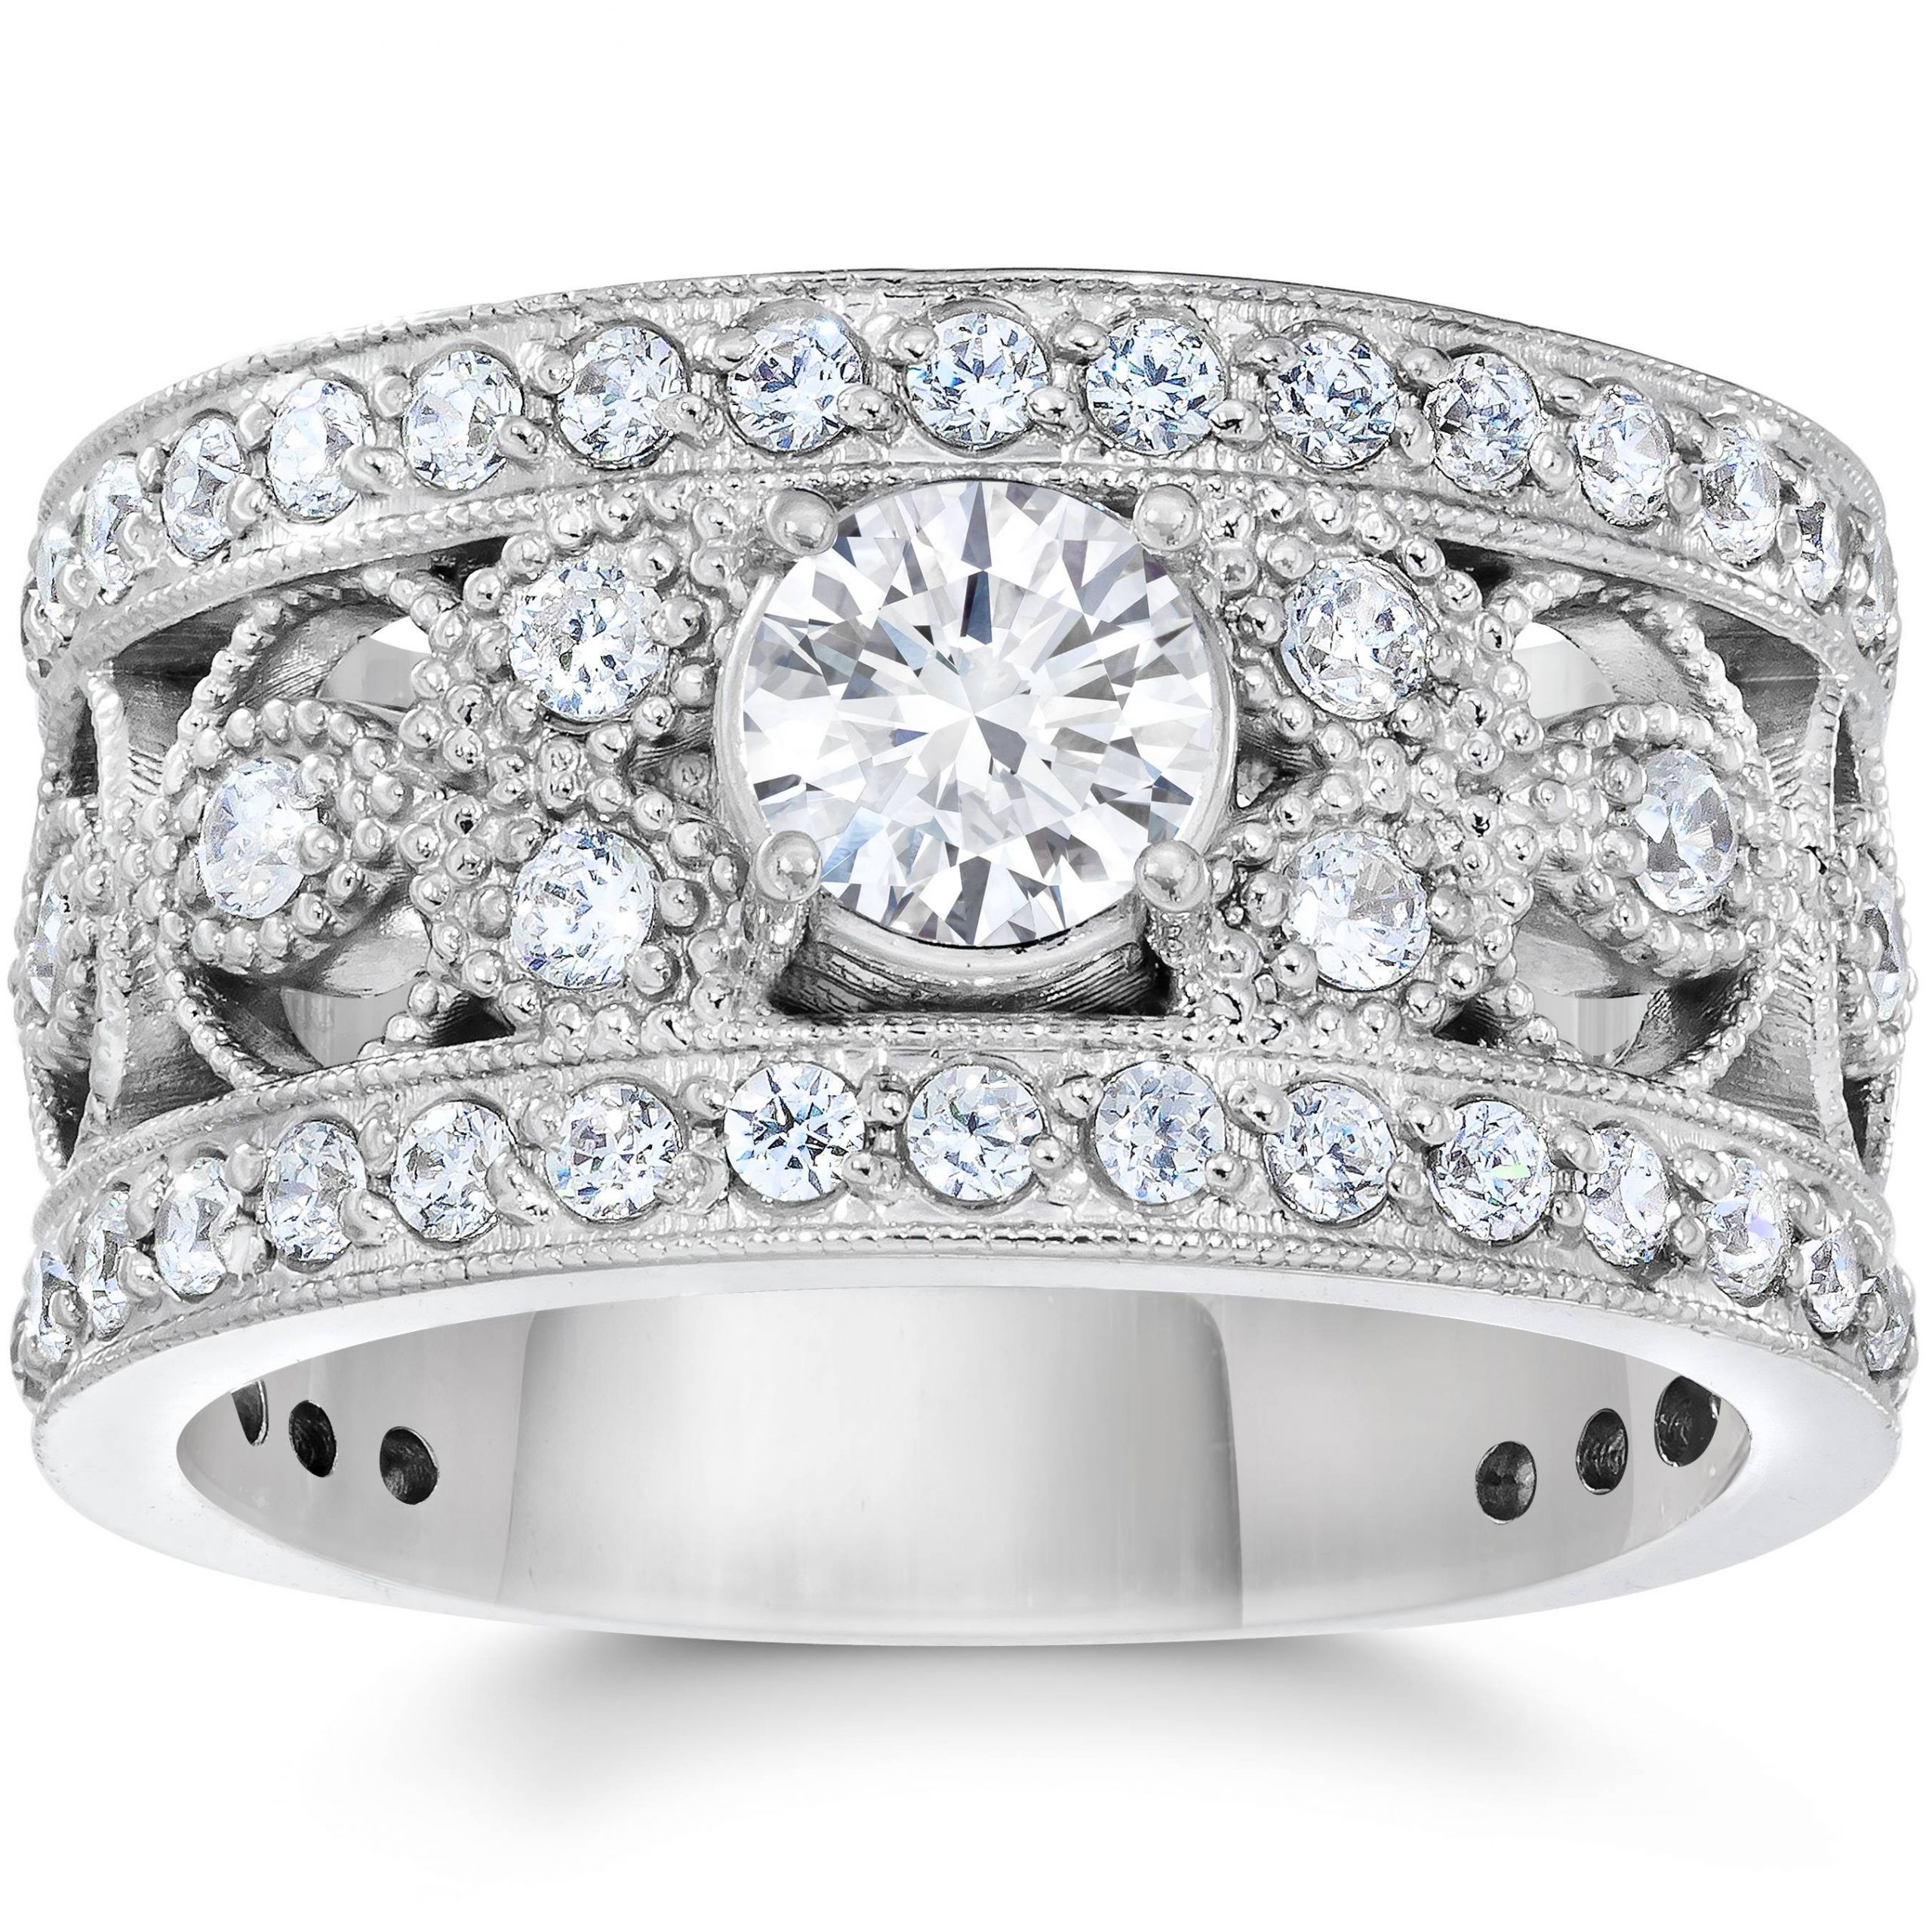 Ebay Diamond Engagement Rings
 1 5 8 Carat Vintage Real Diamond Engagement Ring 10K White